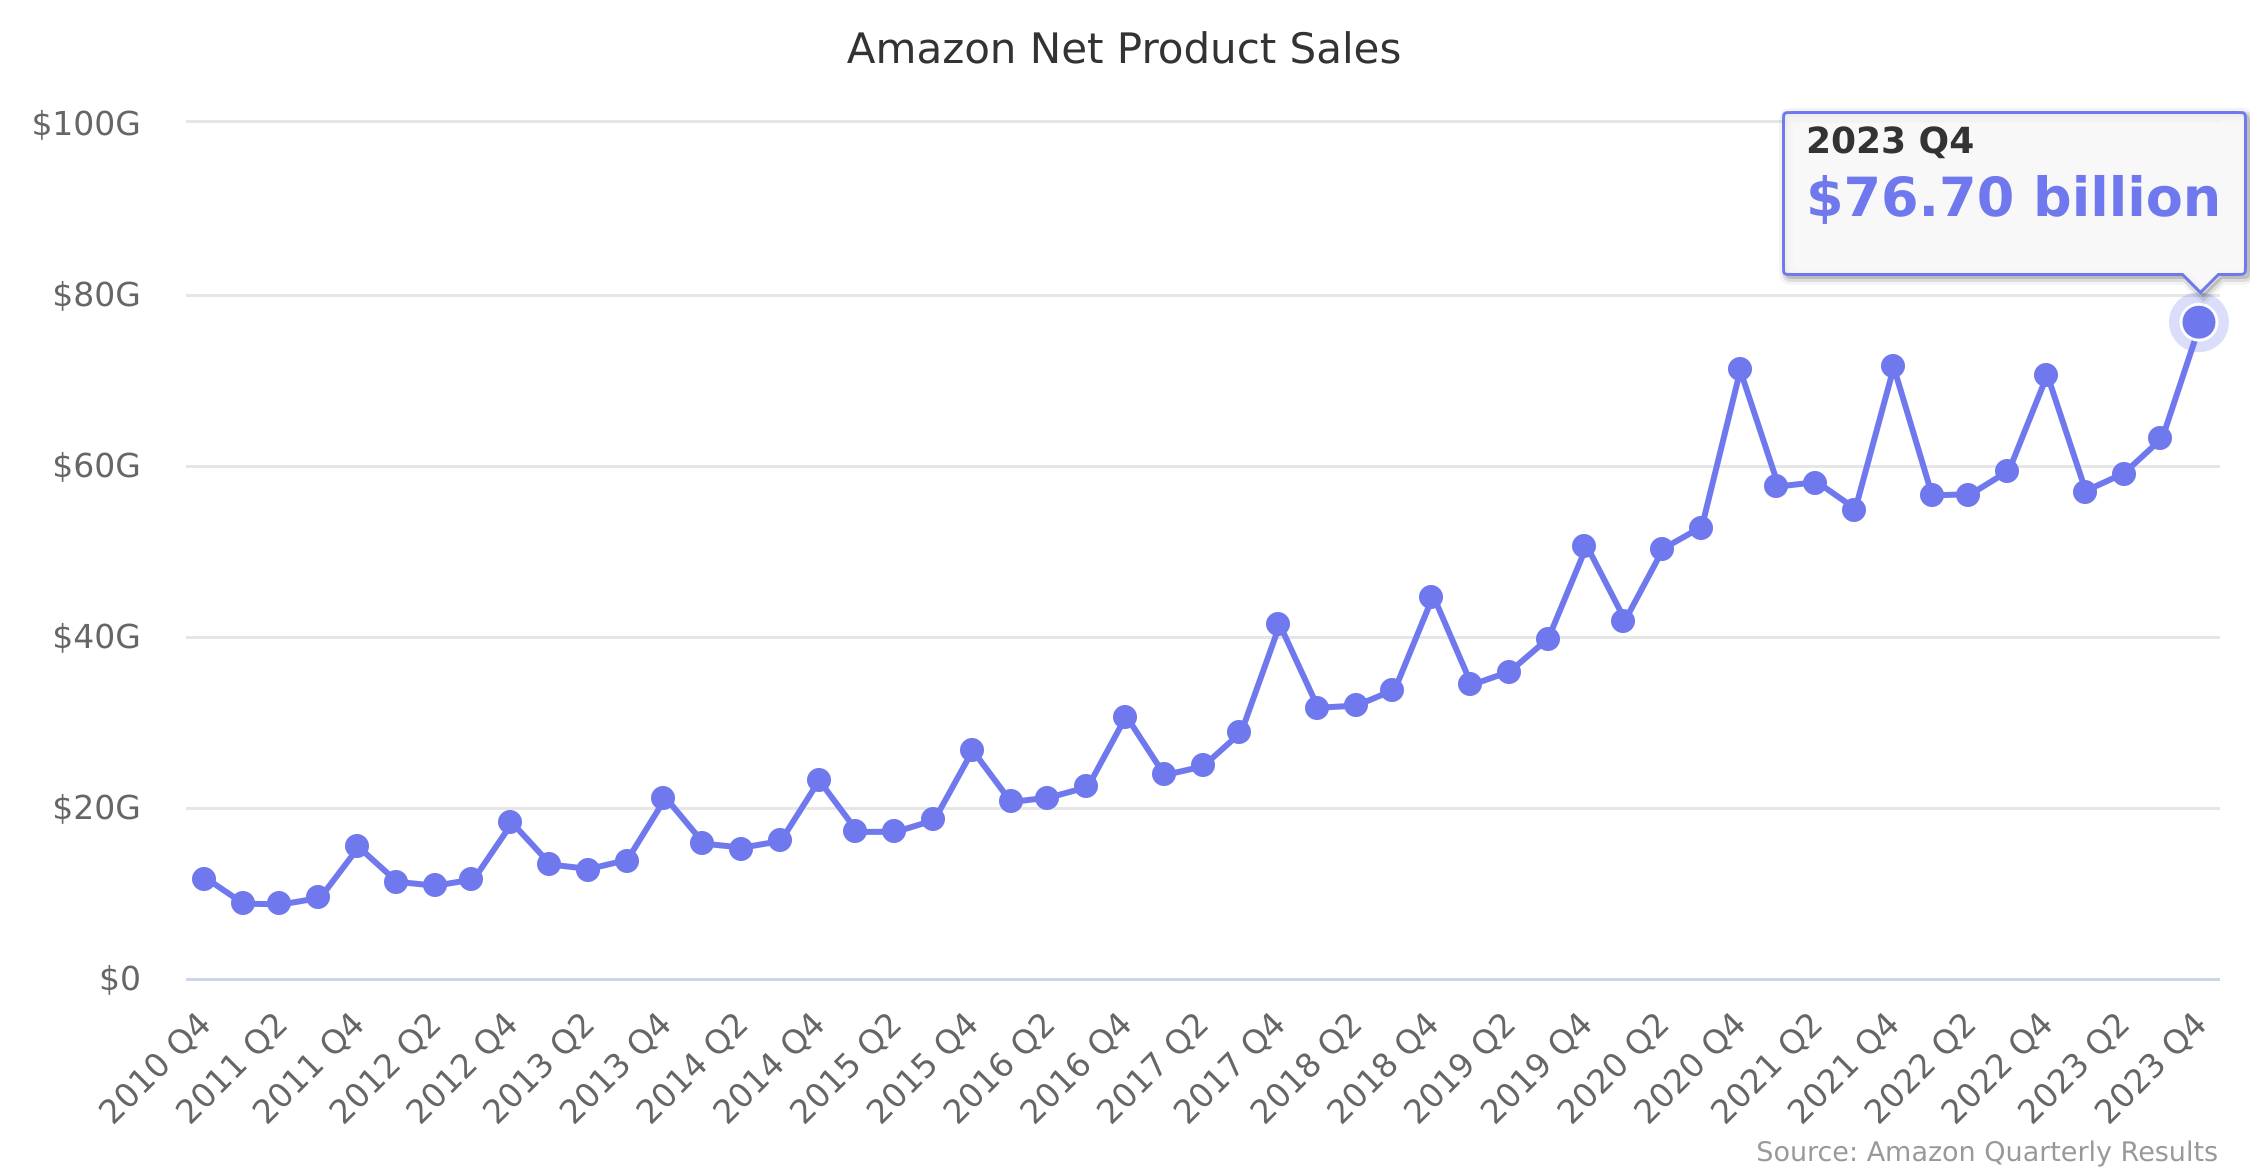 Amazon Net Product Sales 2010-2022